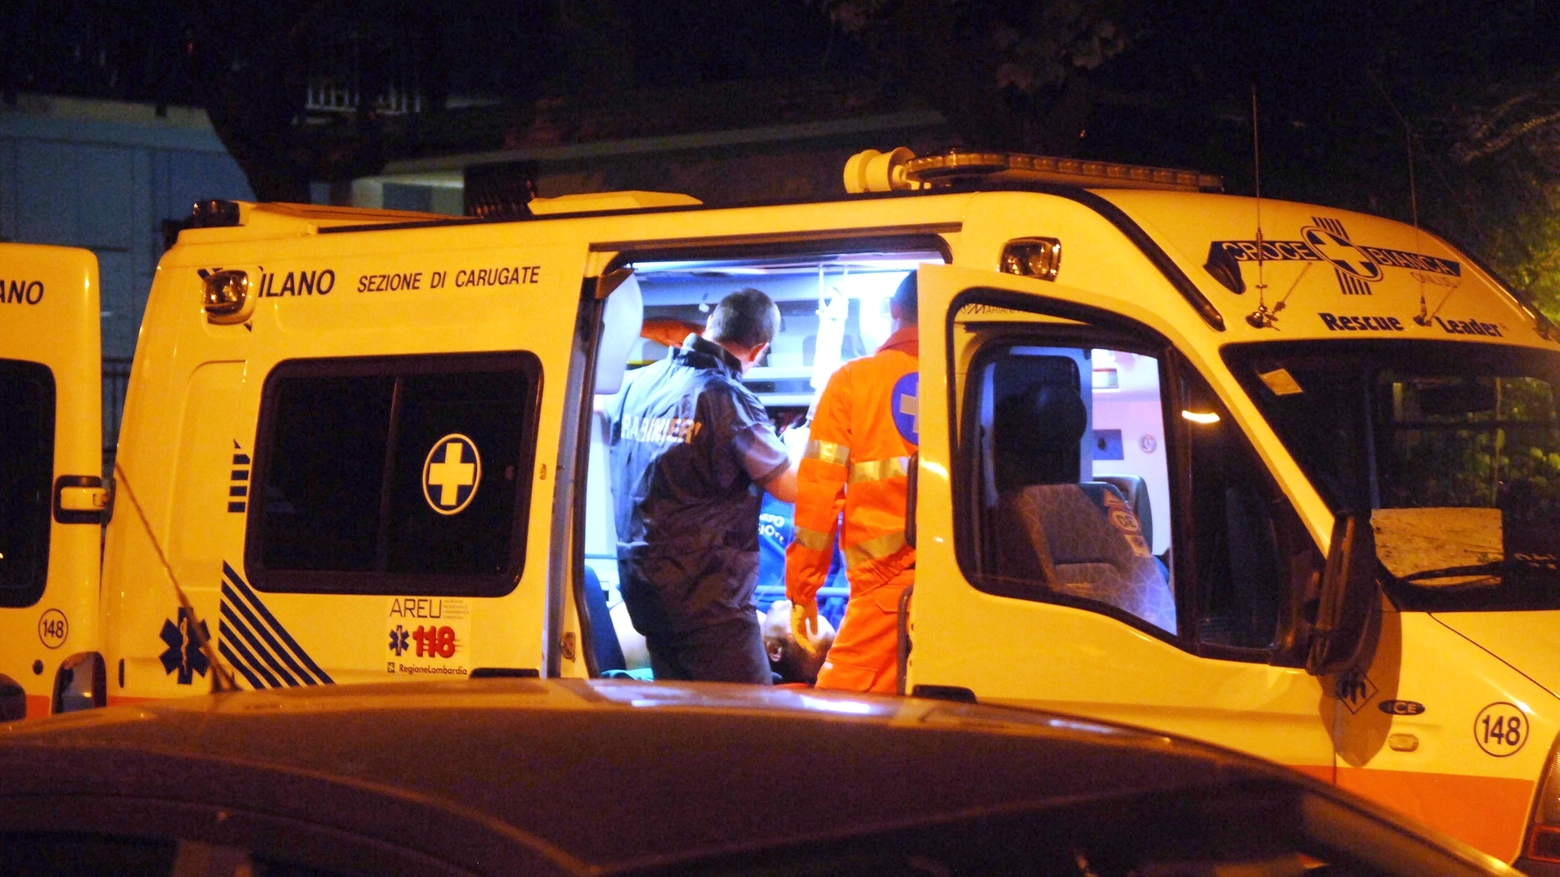 Ambulanza in azione (Newpress)